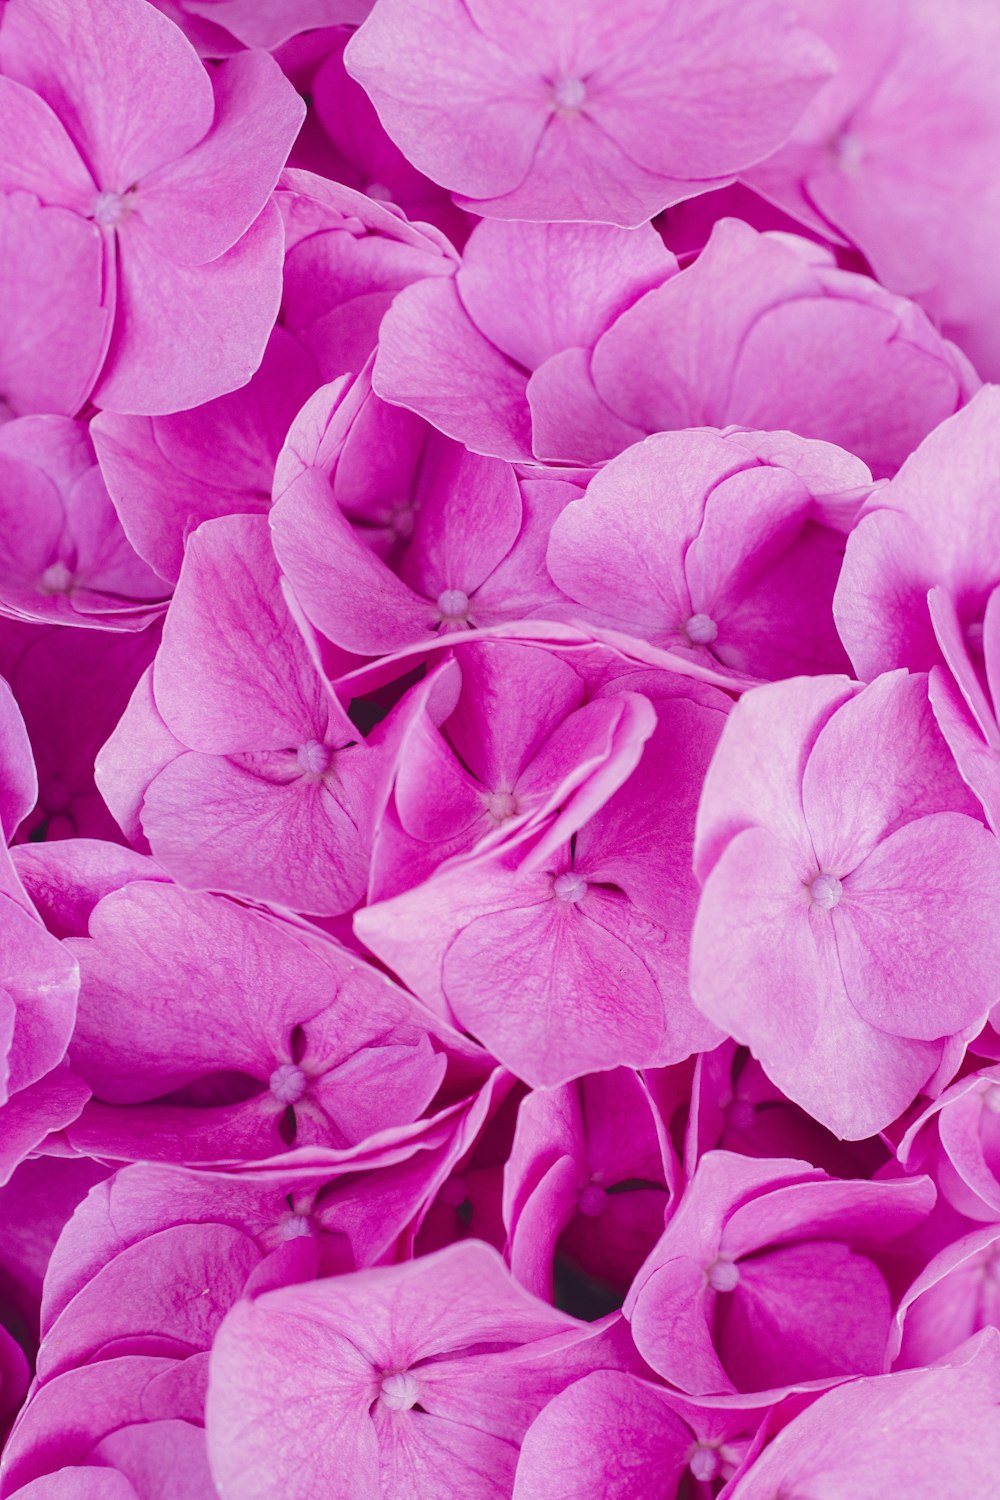 100 Pink Flower Pictures Download Free Images On Unsplash